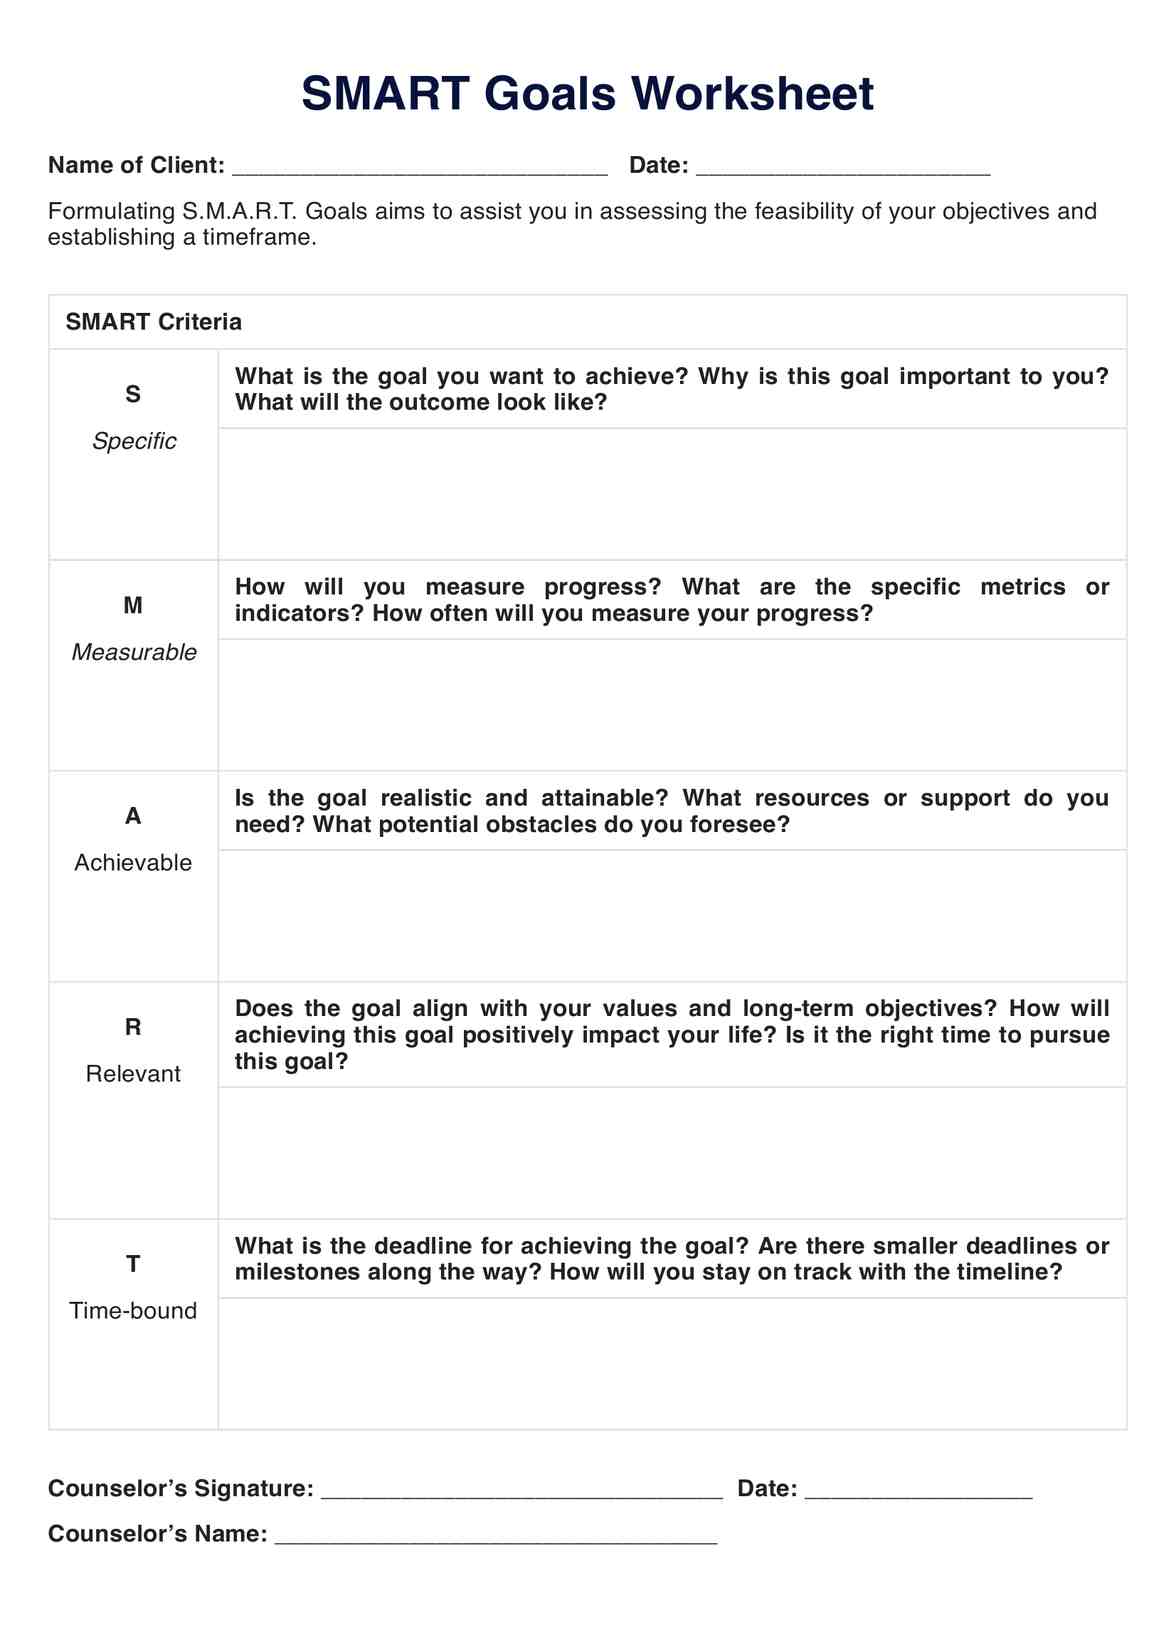 SMART Goals Worksheet PDF Example